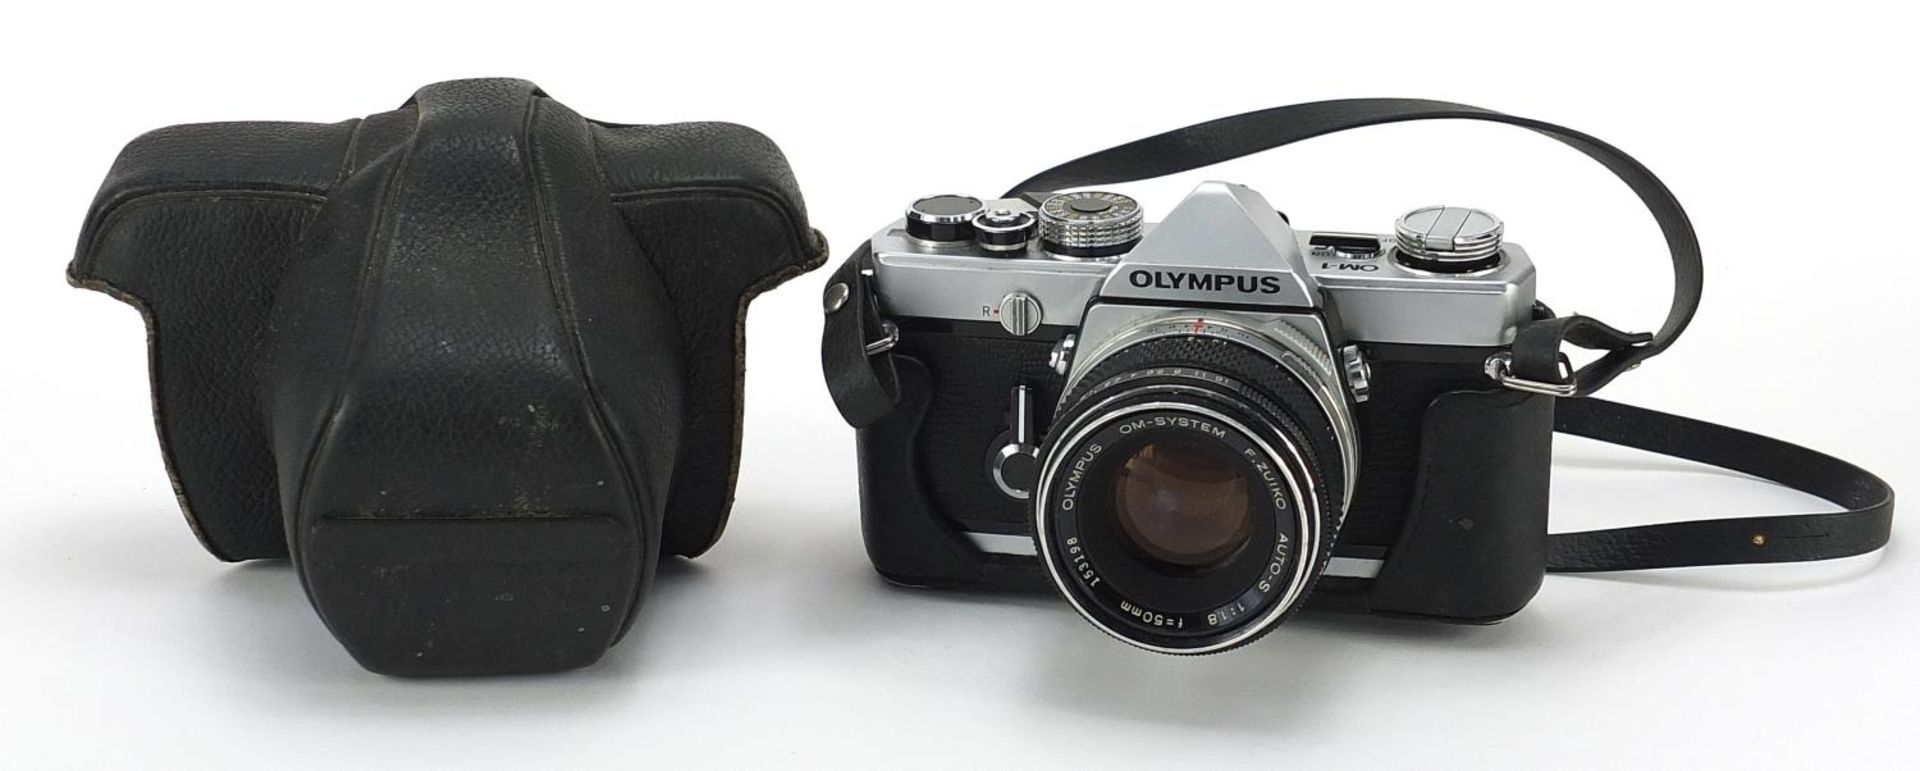 Olympus OM-1 camera with 50mm lens